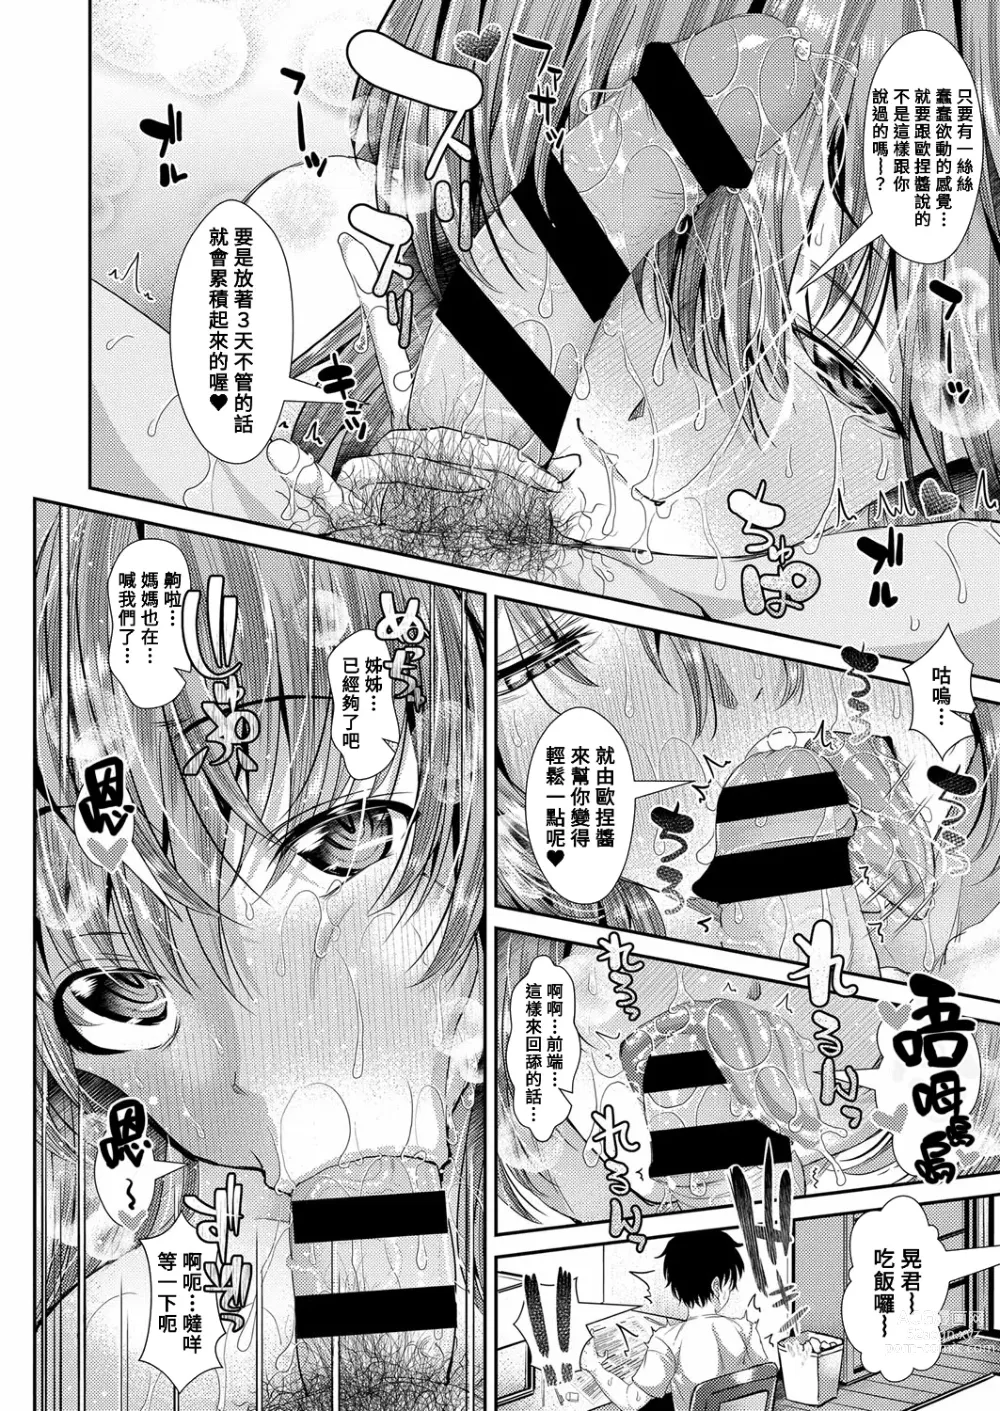 Page 2 of manga Yokujou ☆ Ane Trap